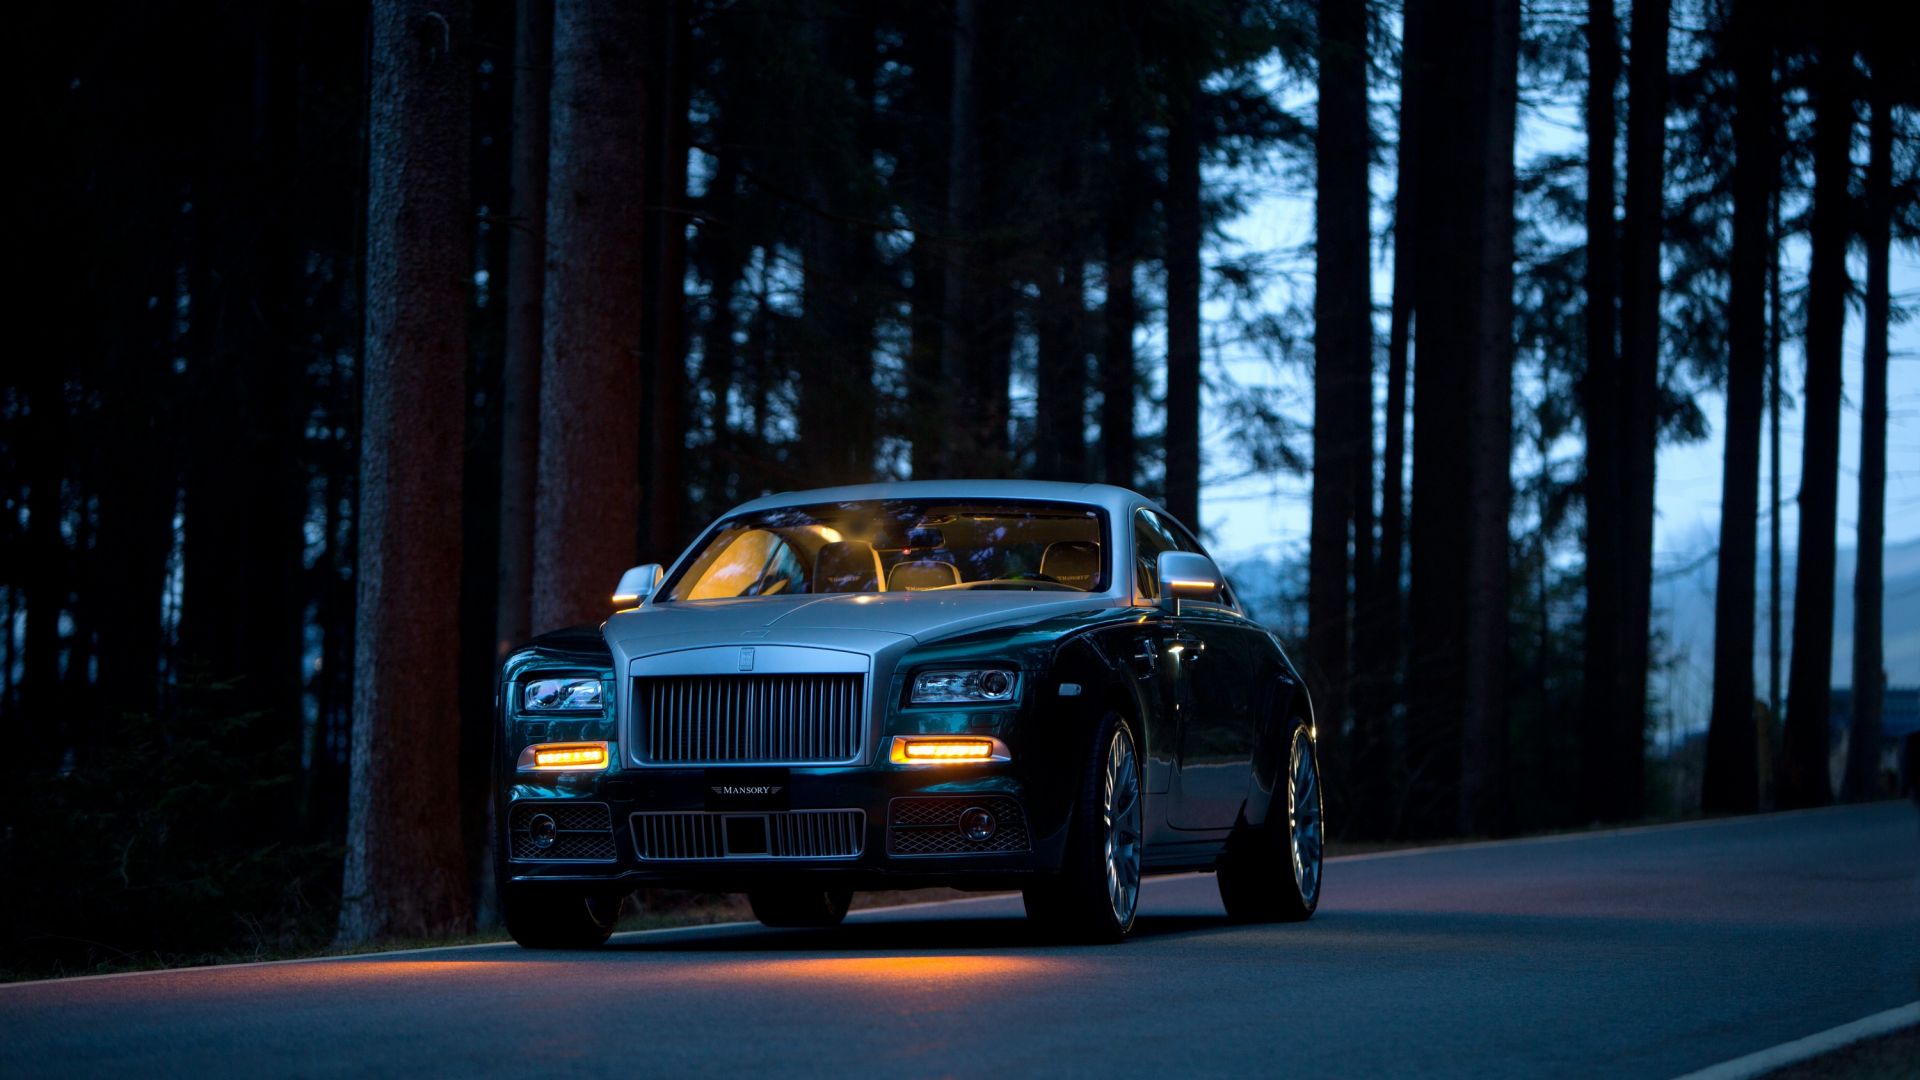 Desktop Wallpaper Rolls Royce Wraith, Luxury Car, Hd Image, Picture,  Background, C88c66